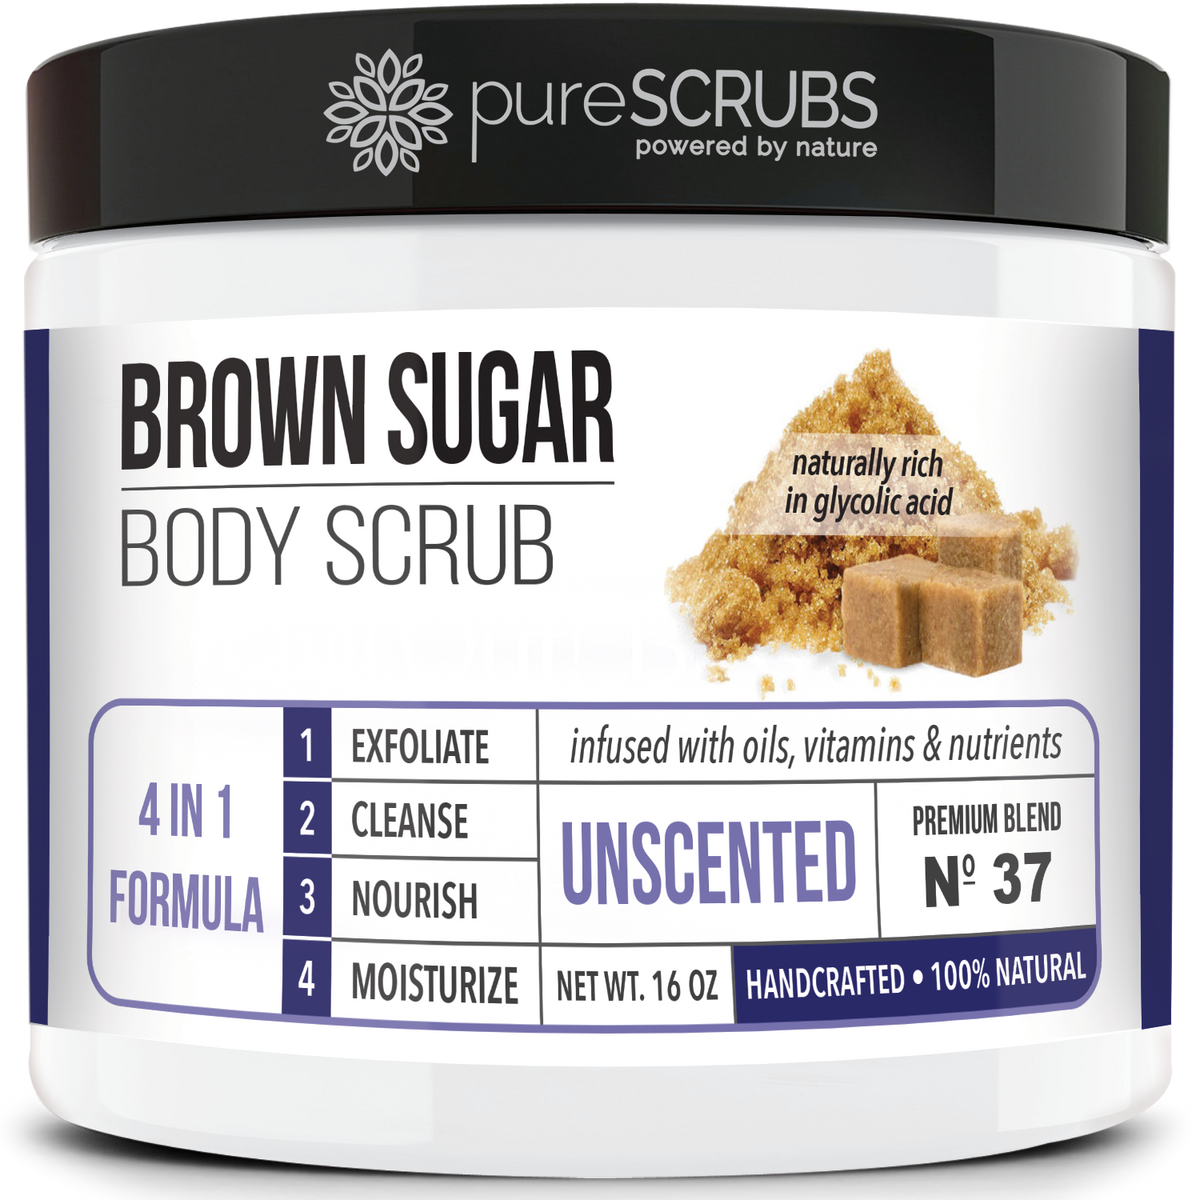 Unscented Body Scrub / Brown Sugar / Premium Blend #37